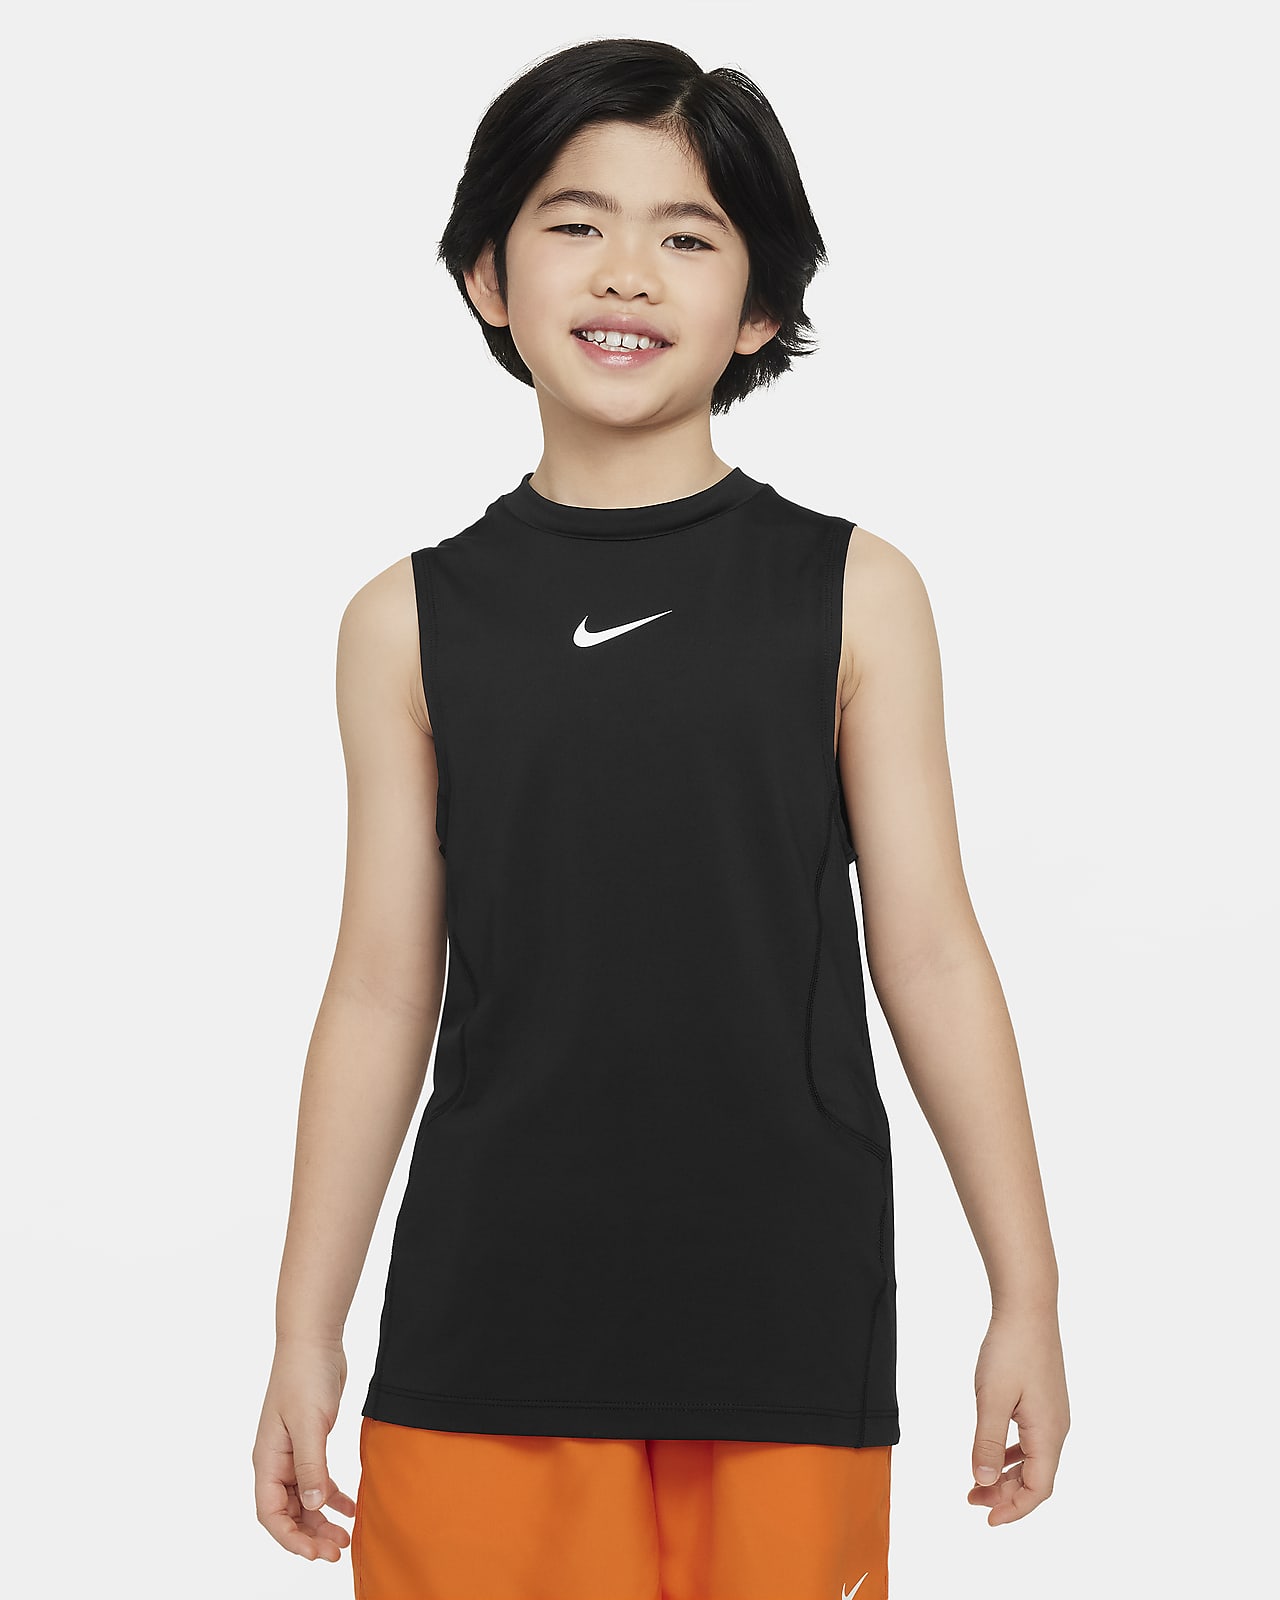 Ärmlös tröja Nike Pro för ungdom (killar)